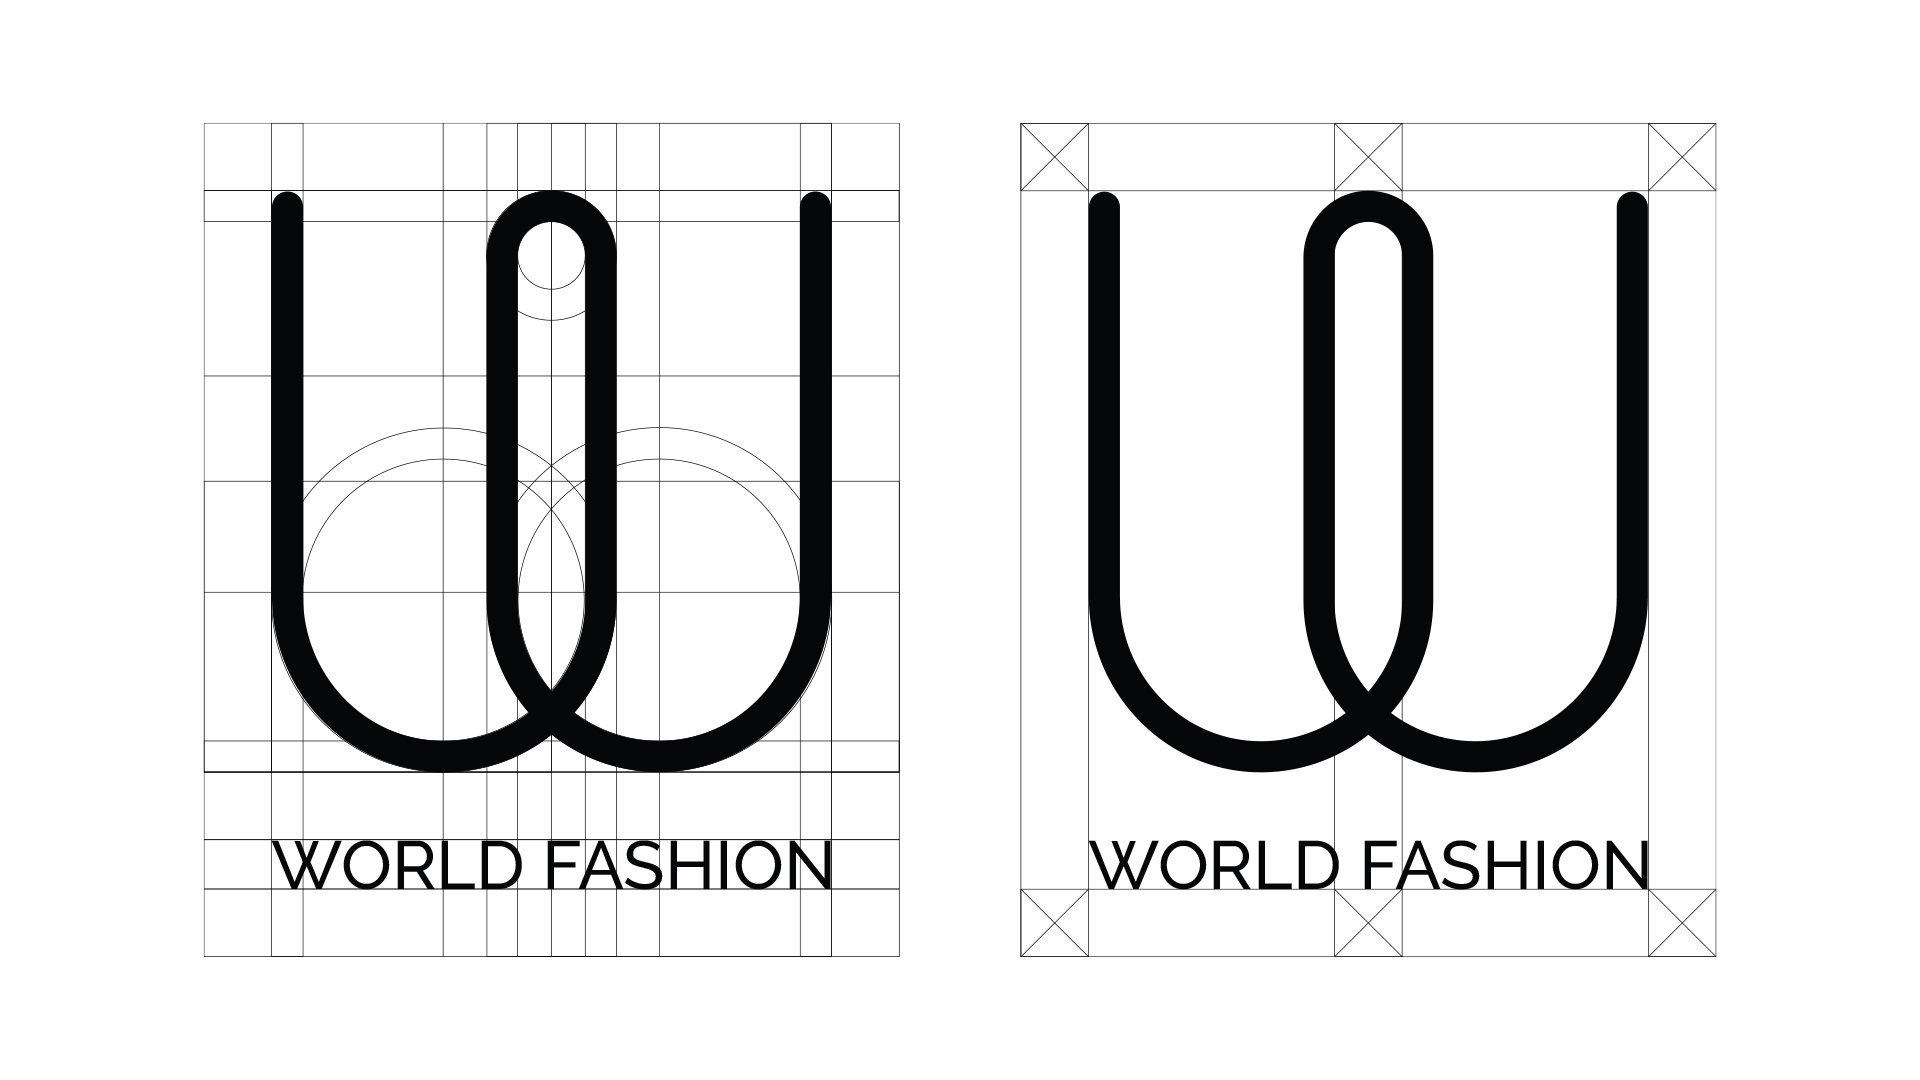 World Fashion - Alan Jiang